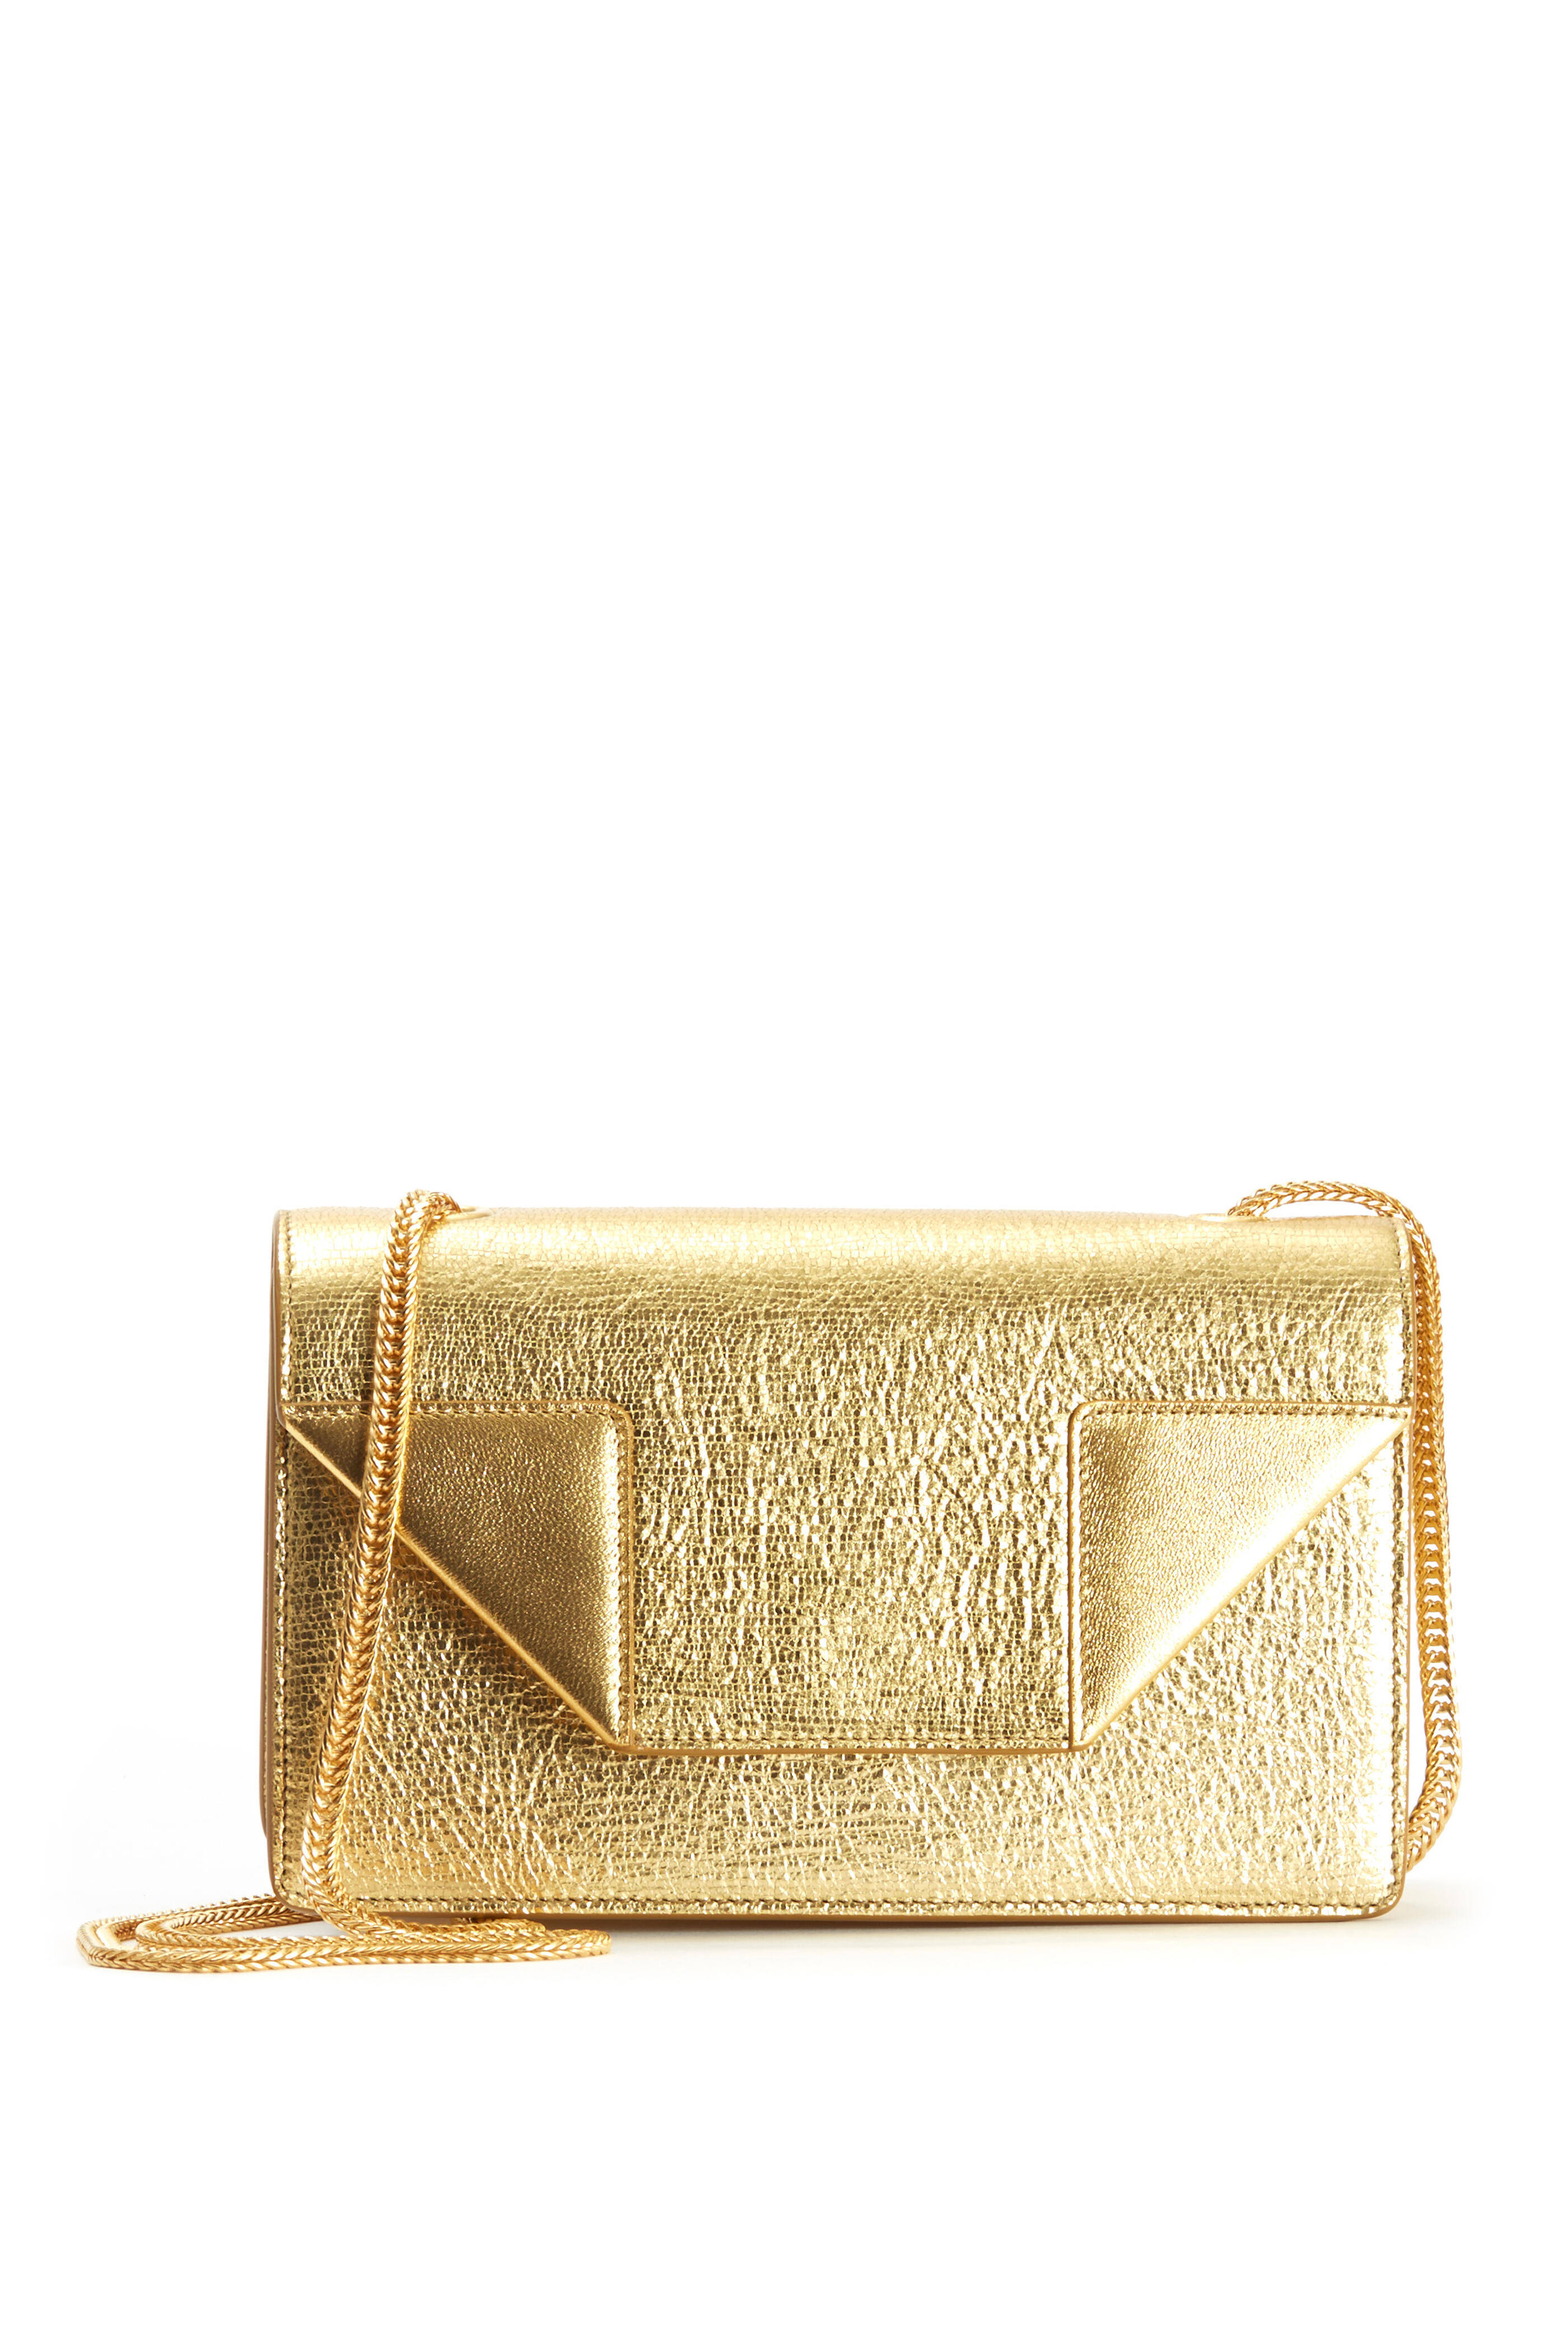 Saint Laurent Betty Mini Shoulder Bag $1,304 via MATCHESFASHION